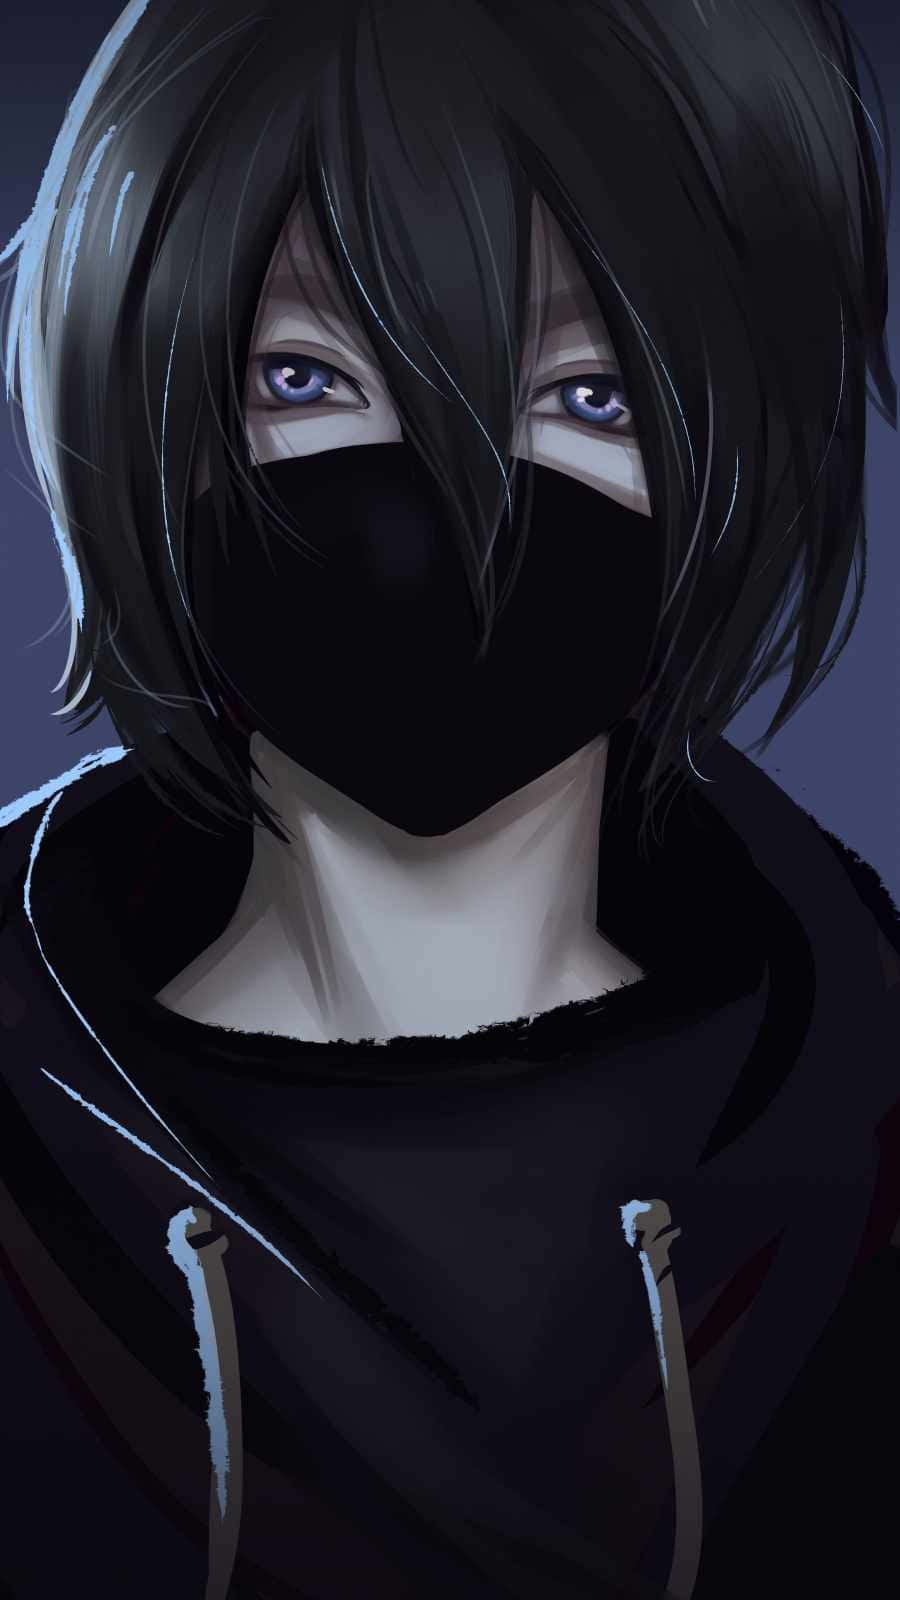 Anime Boy With Black Mask Wallpaper